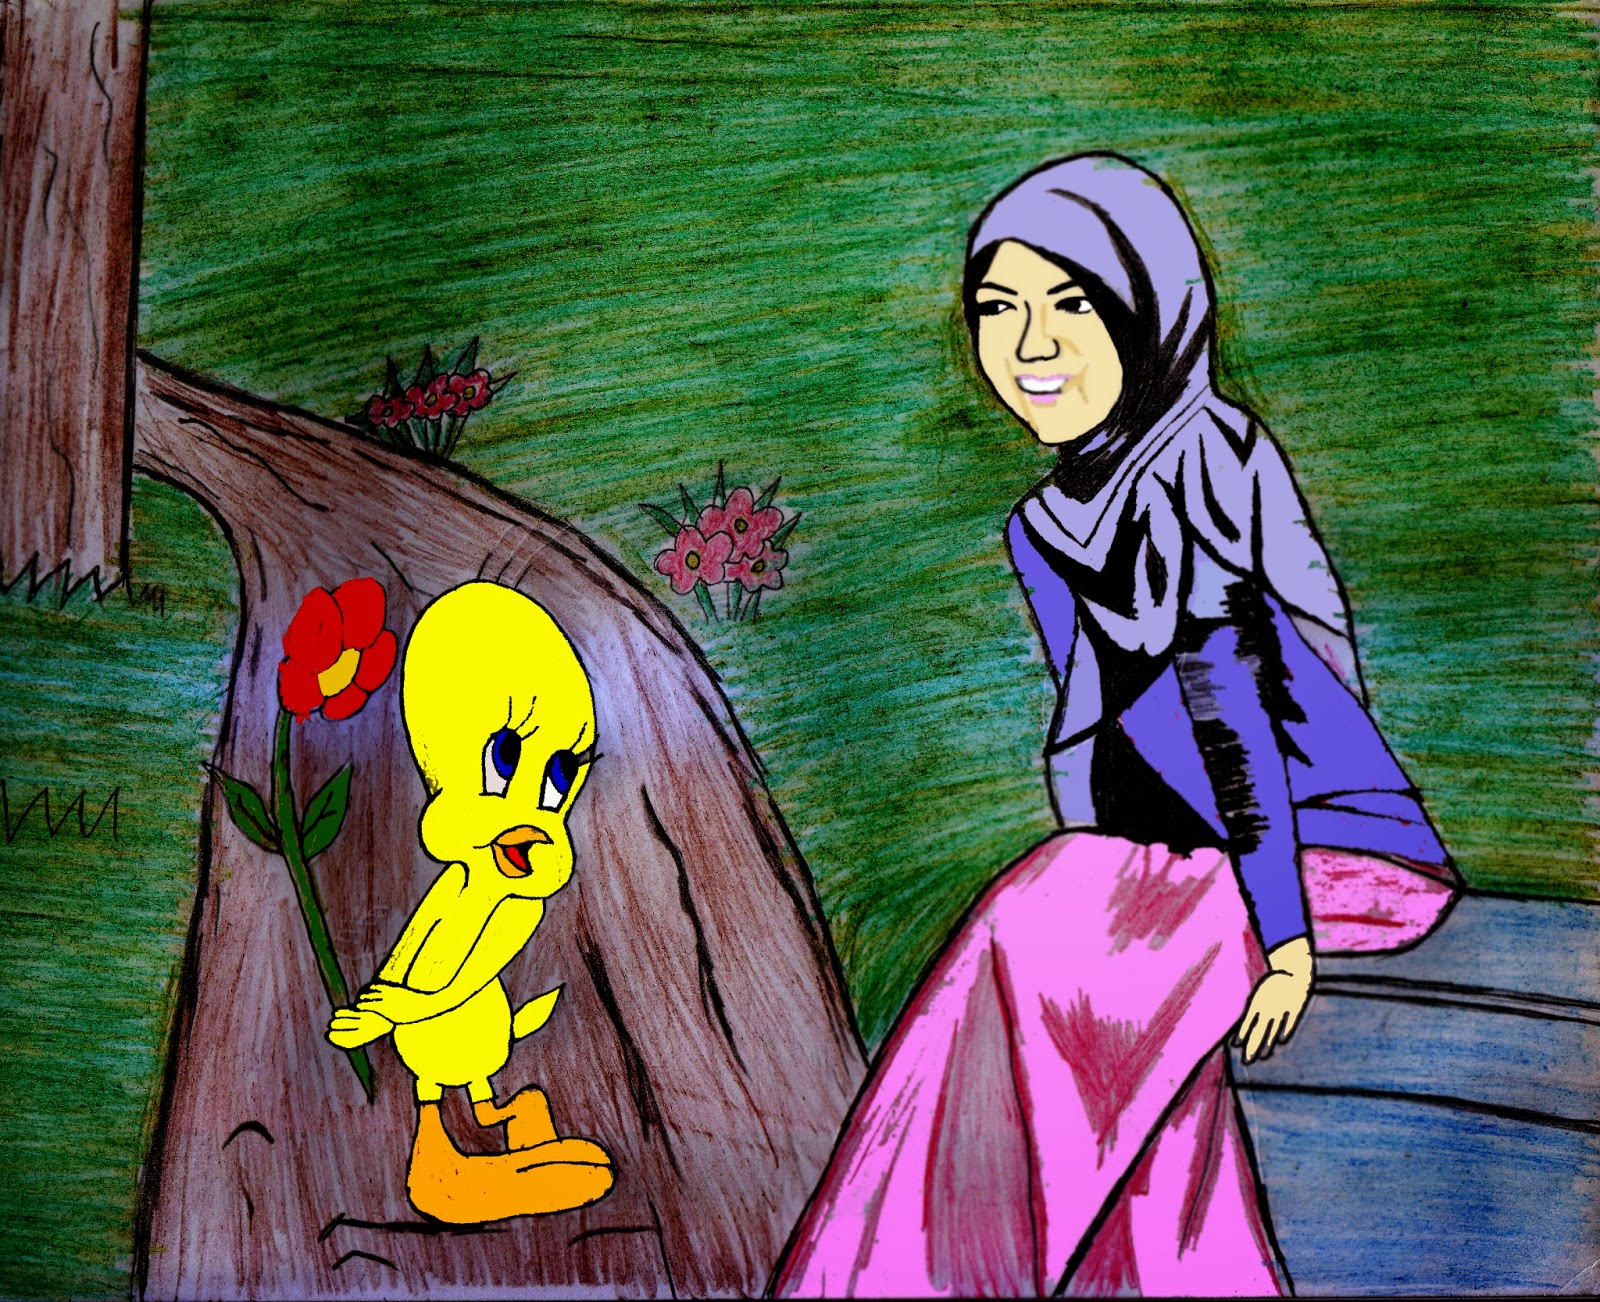 Gambar Kartun Muslim Couple Romantis Top Gambar